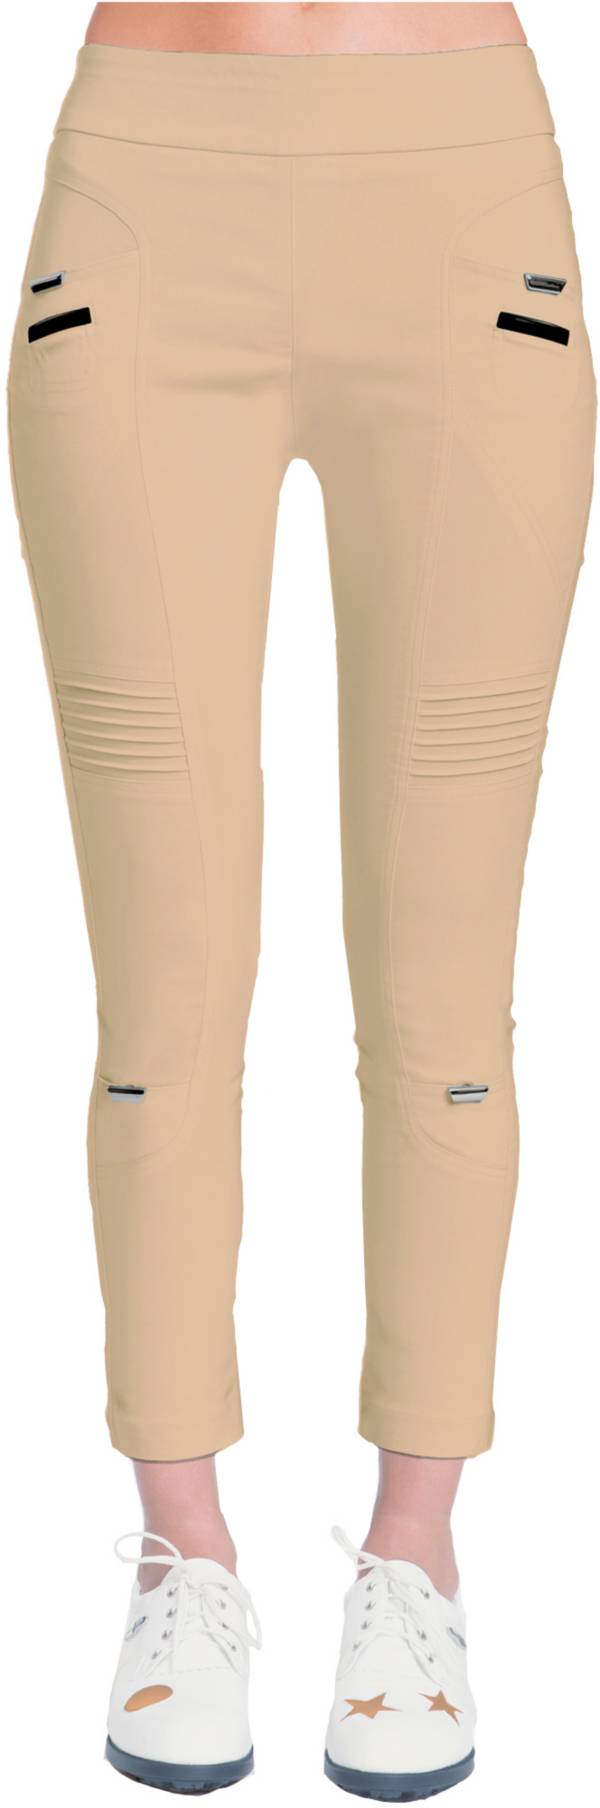 Jamie Sadock Women's 38.5” Skinnylicious Ankle Golf Pant product image